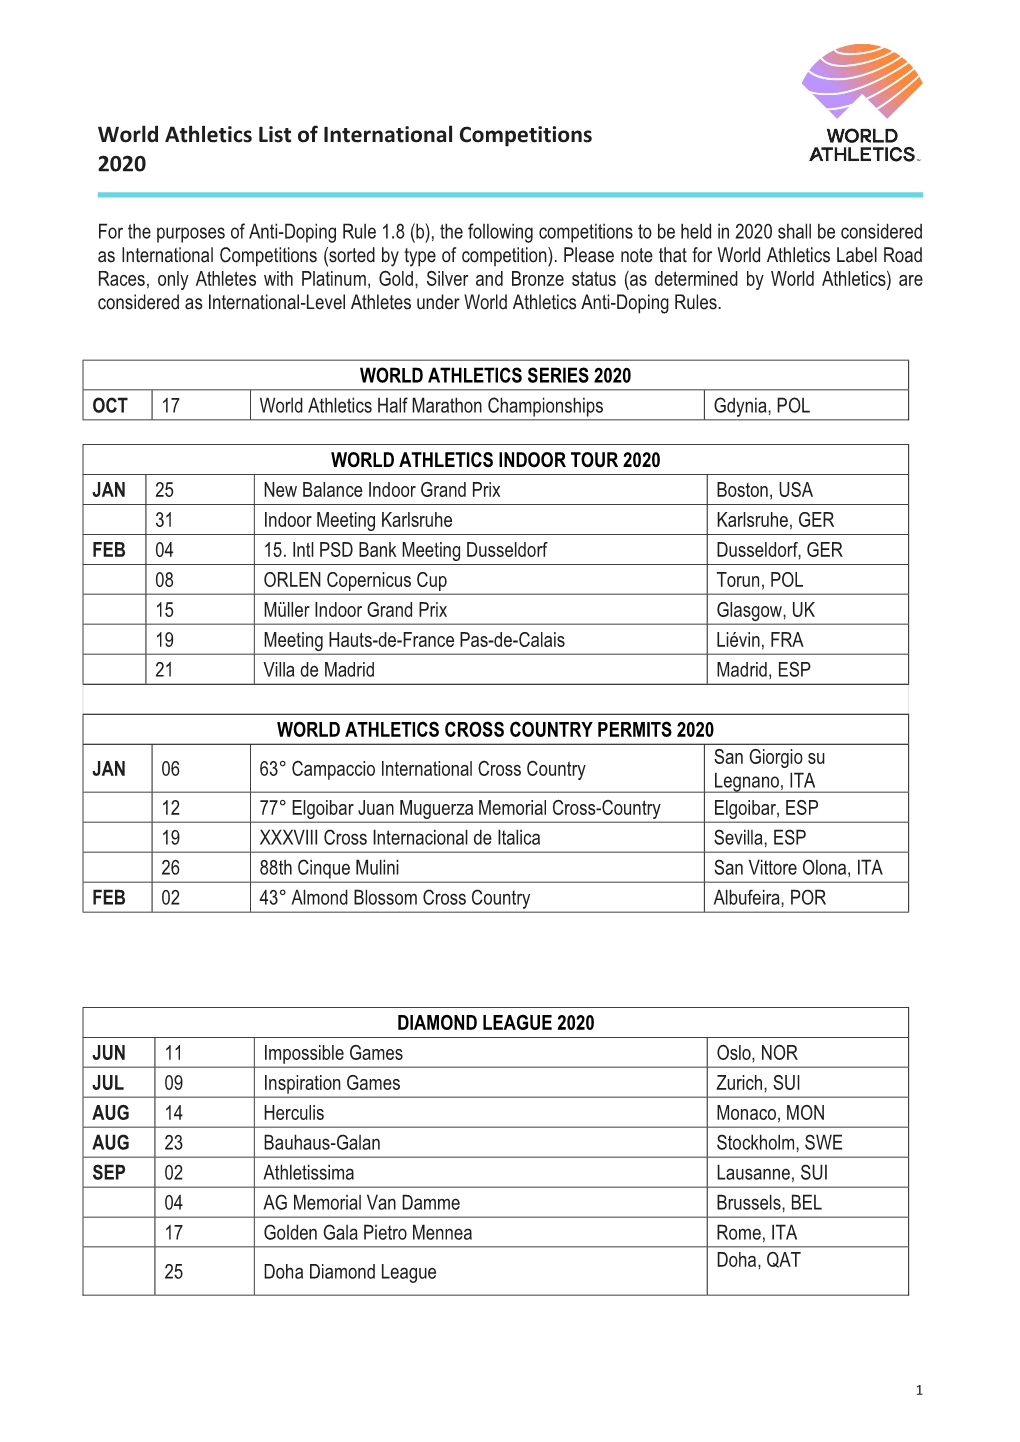 World Athletics List of International Competitions 2020